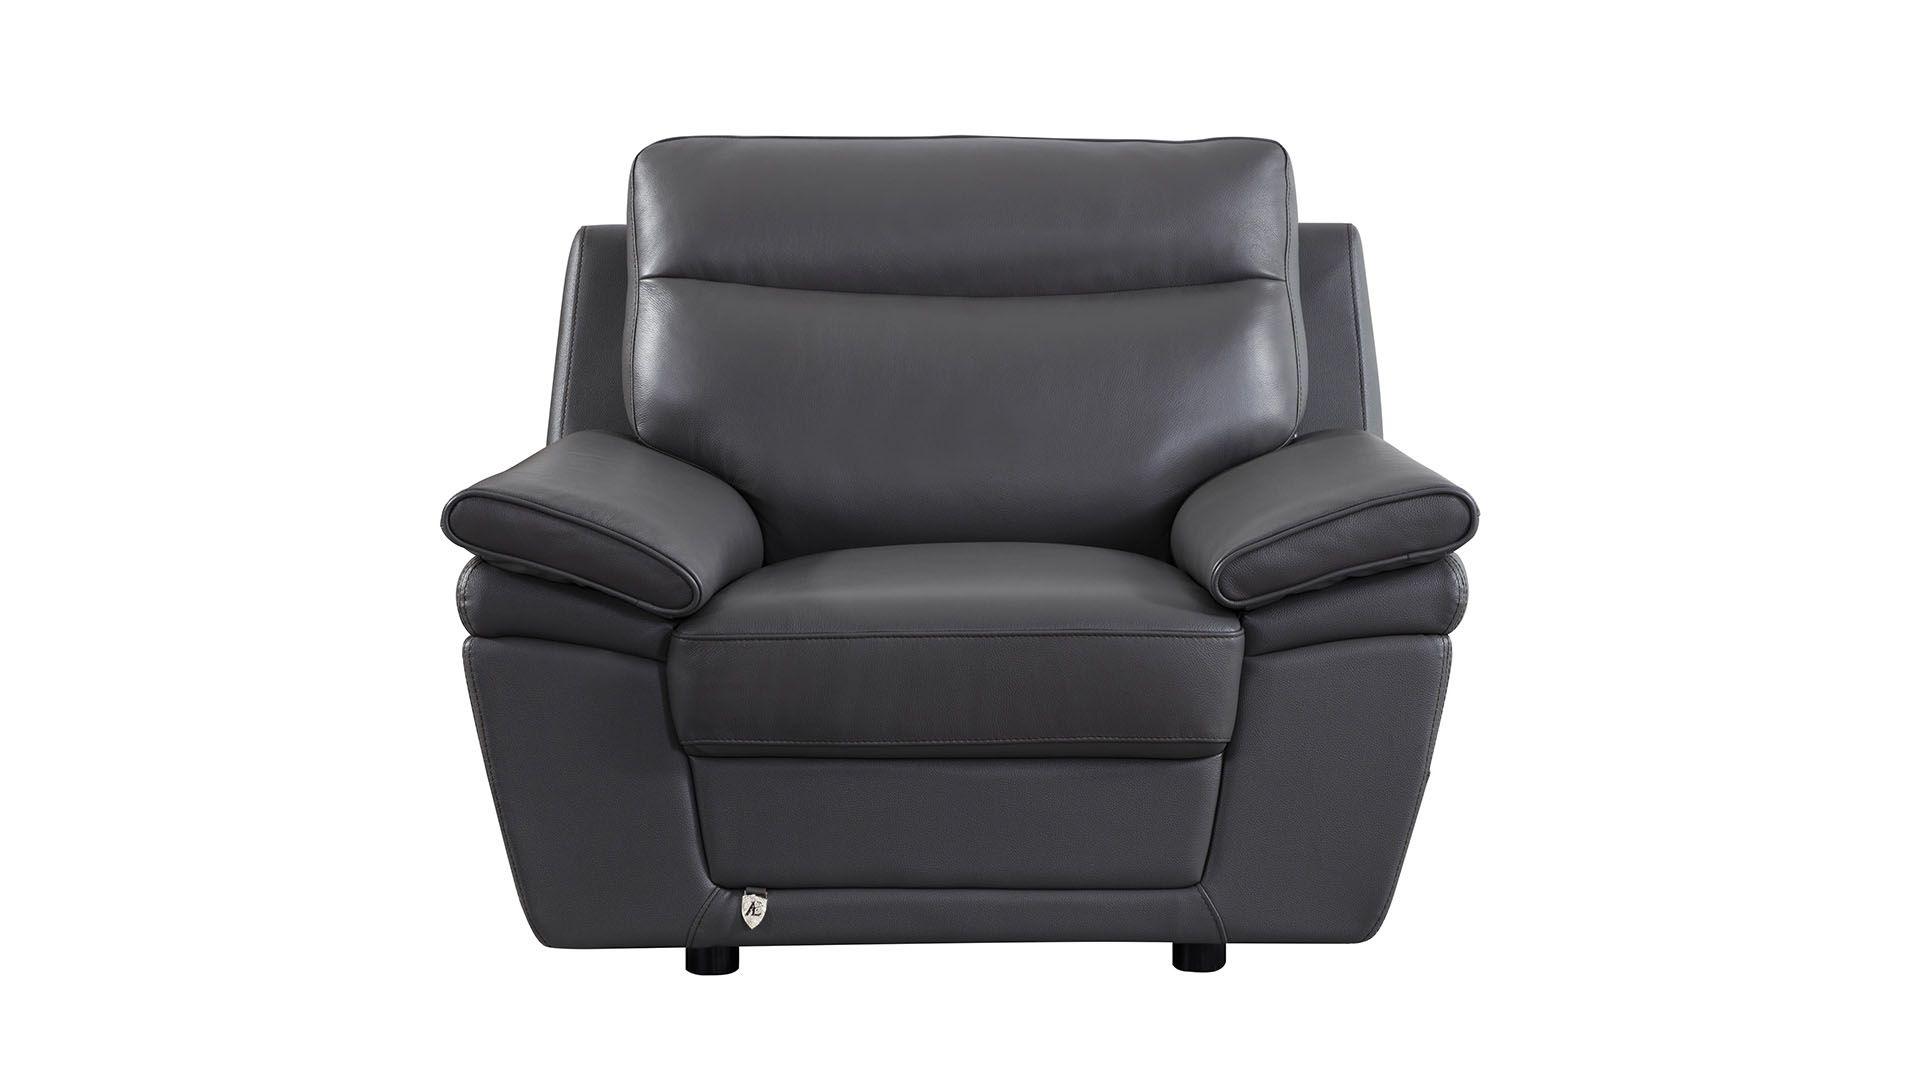 Contemporary, Modern Arm Chair EK092-GR-CHR EK092-GR-CHR in Gray Top grain leather